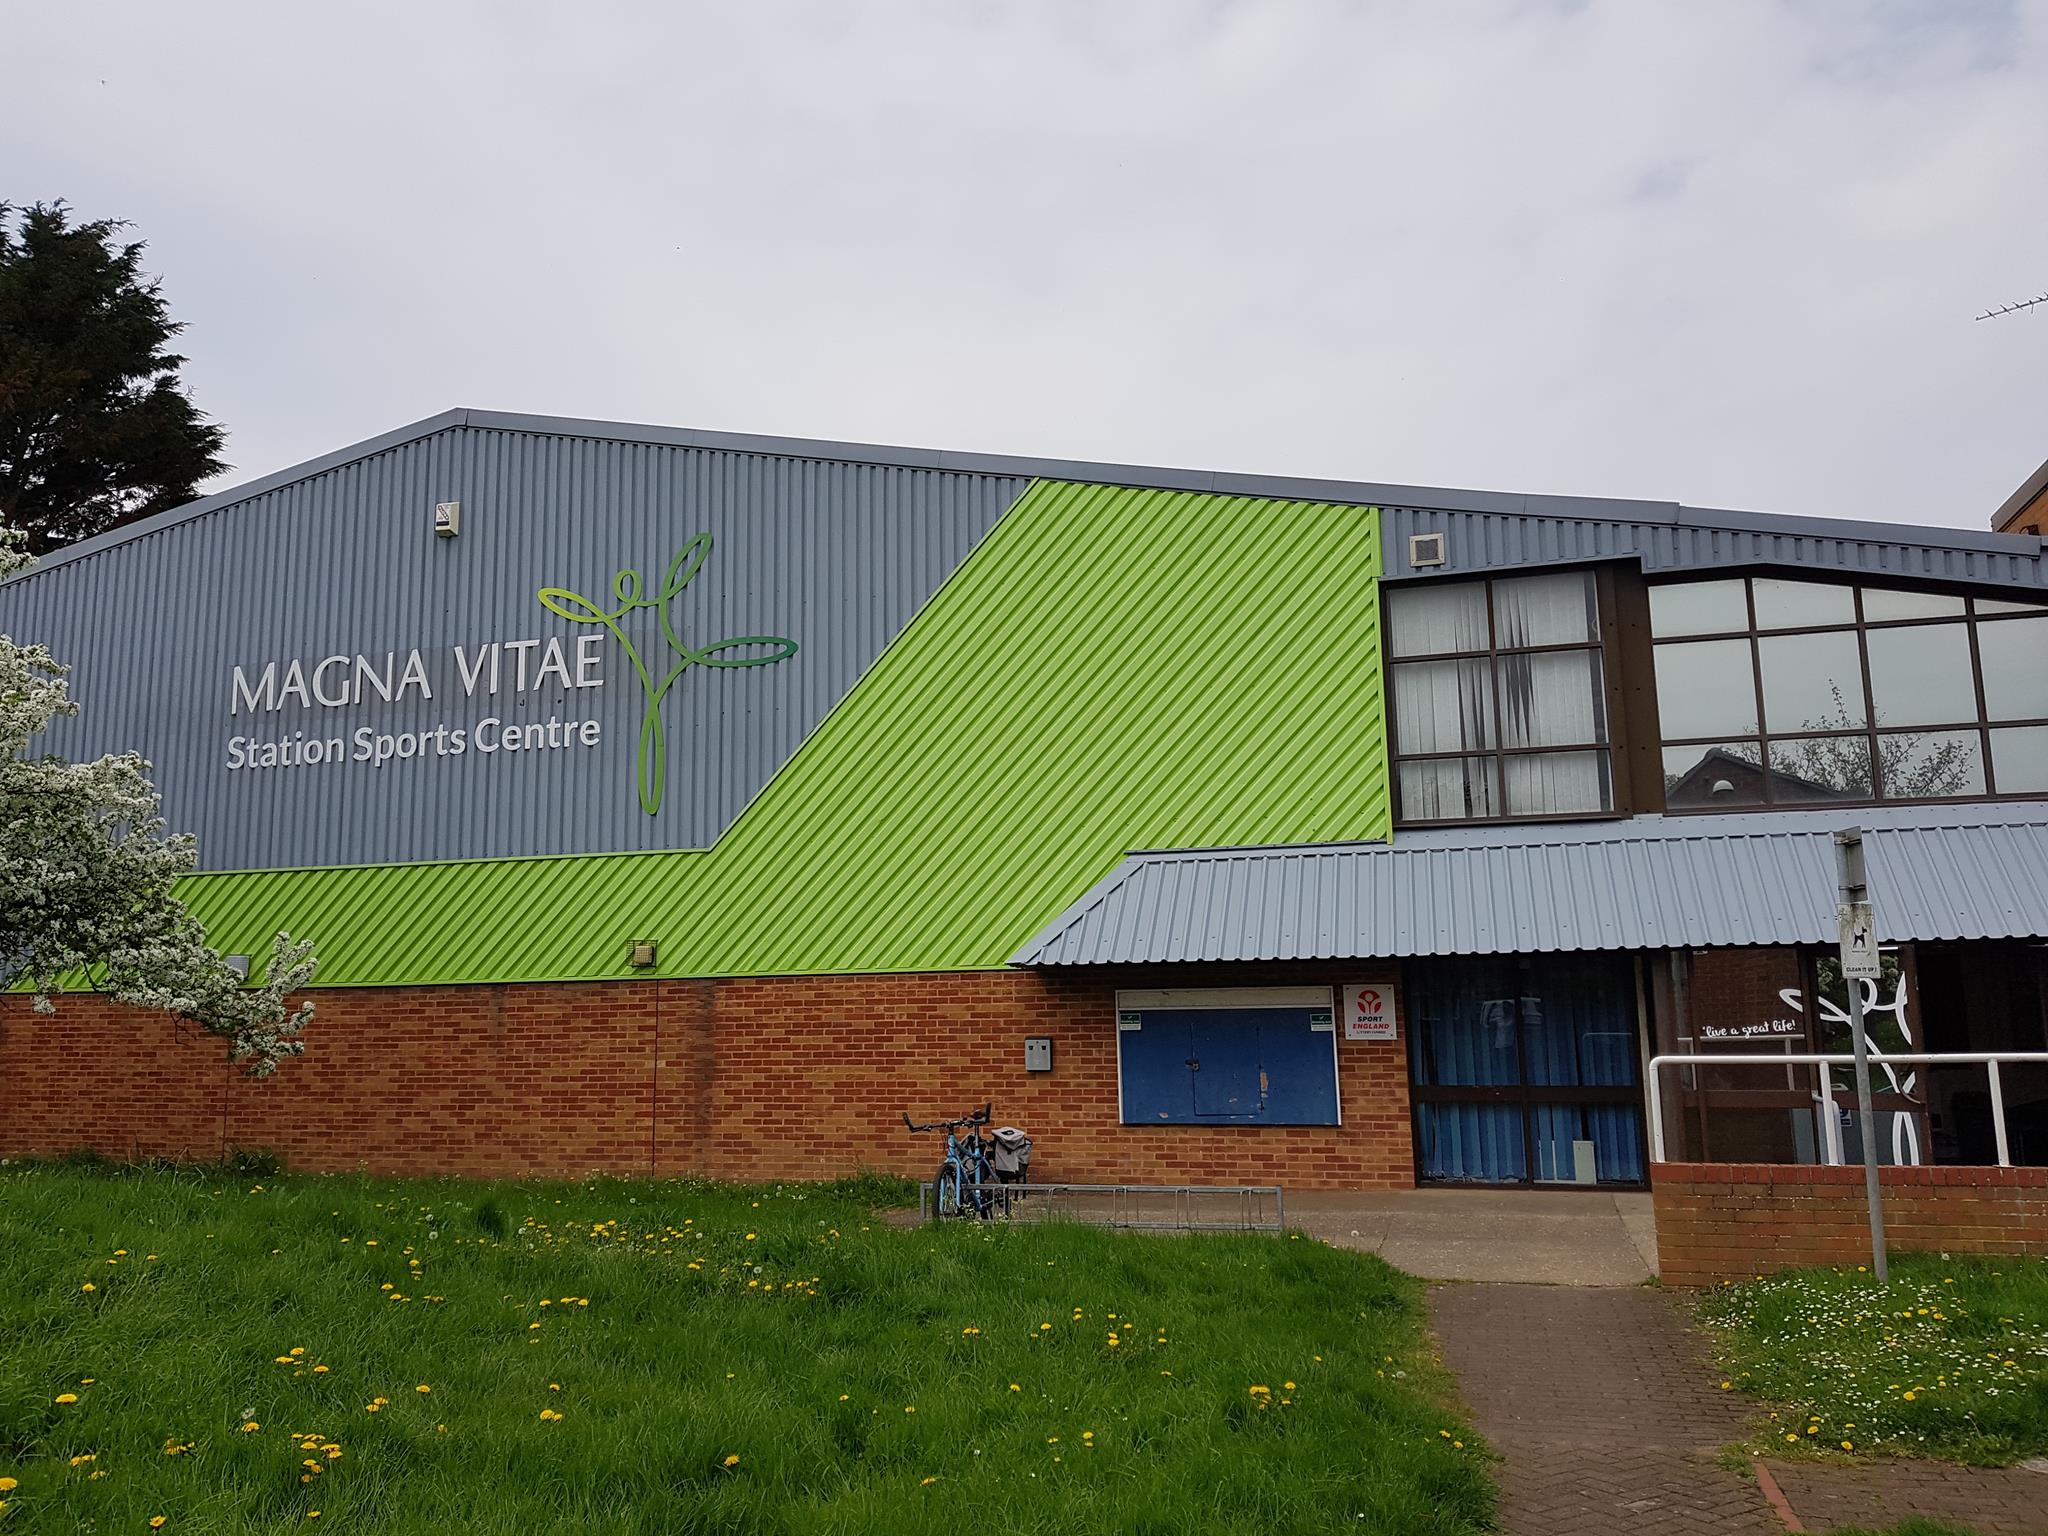 Station Sports Centre, Mablethorpe